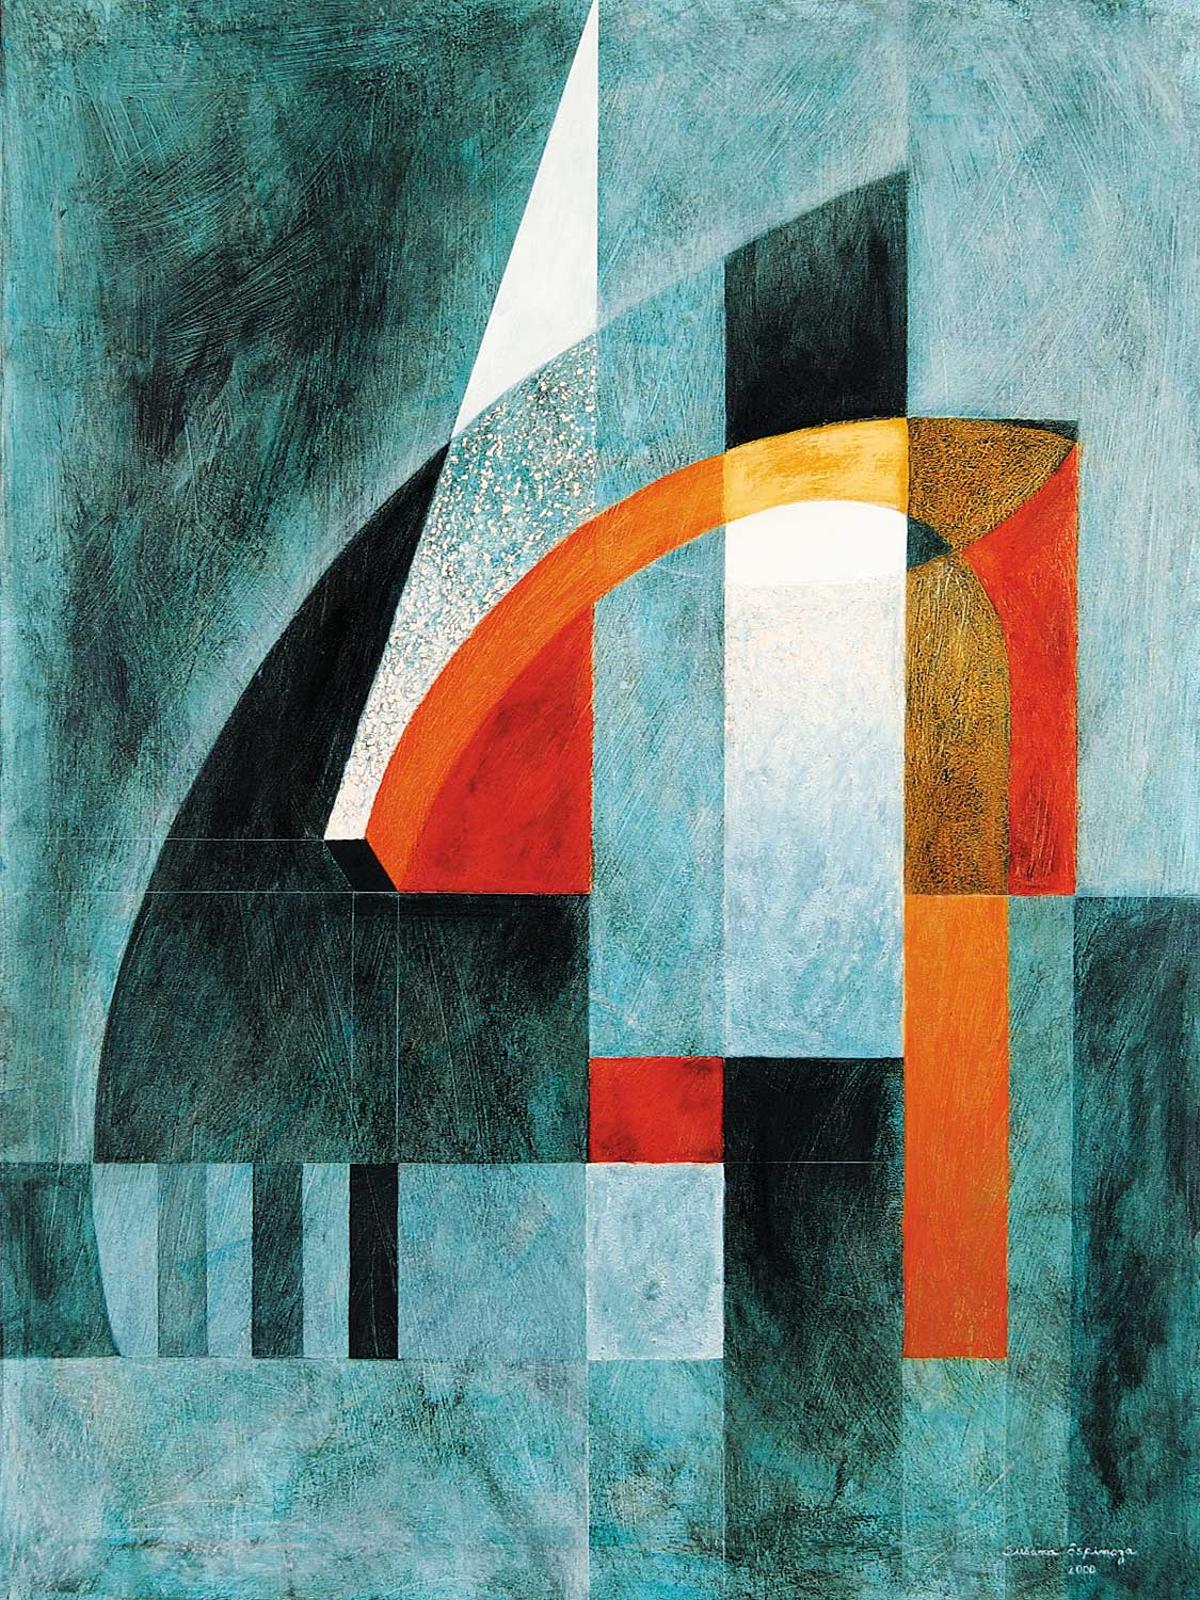 Susana Espinoza (1954) - Turquoise Composition